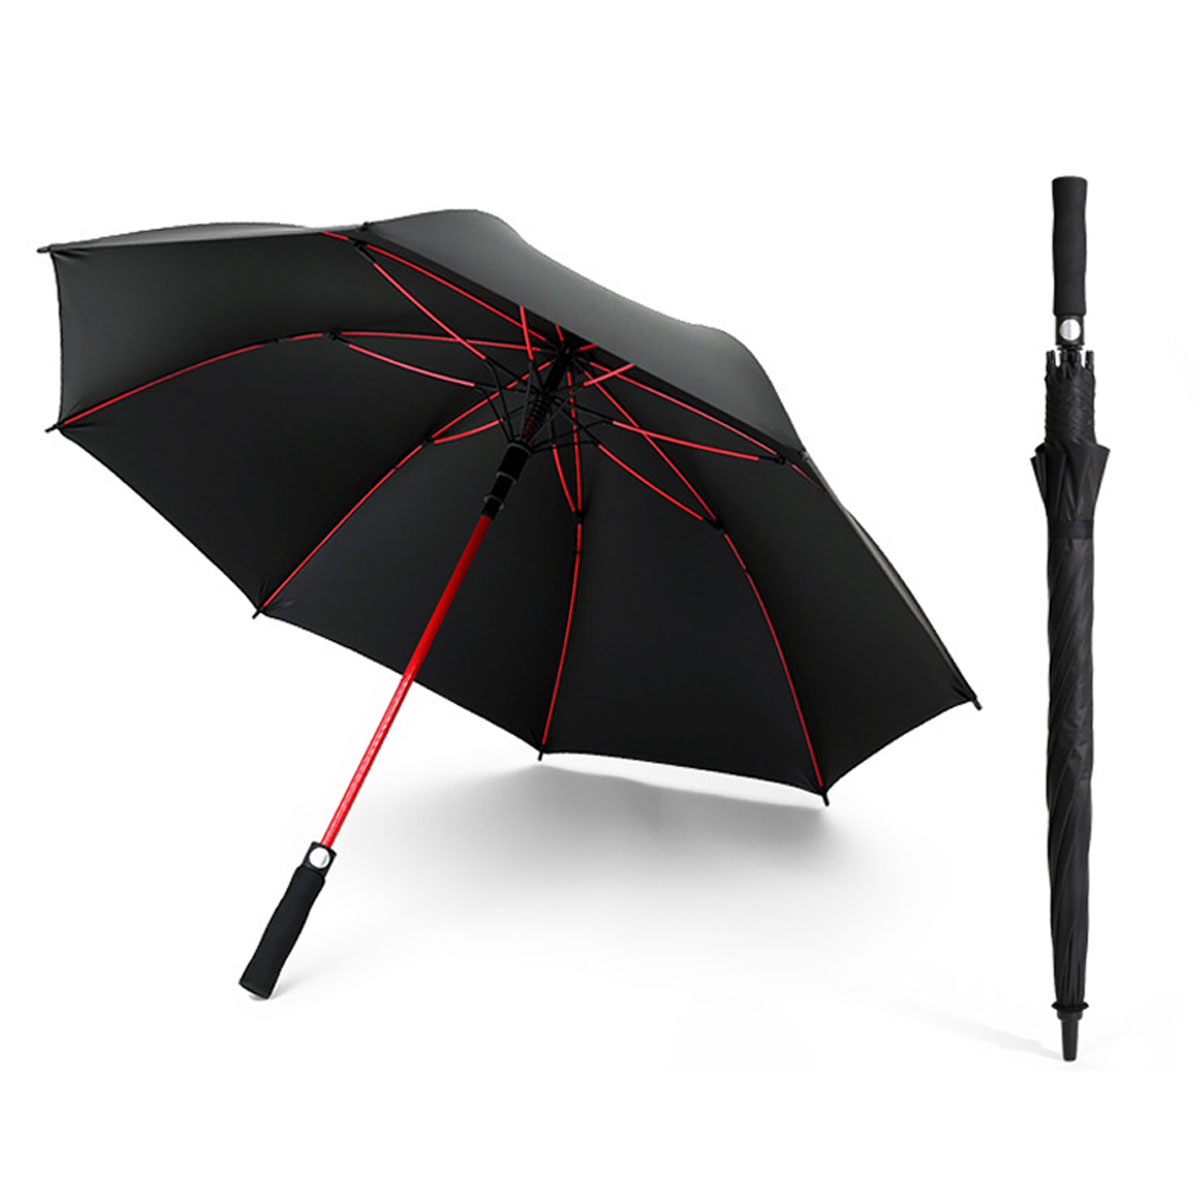 GL-AKL0075 56inch Auto Promotional Golf Umbrella 